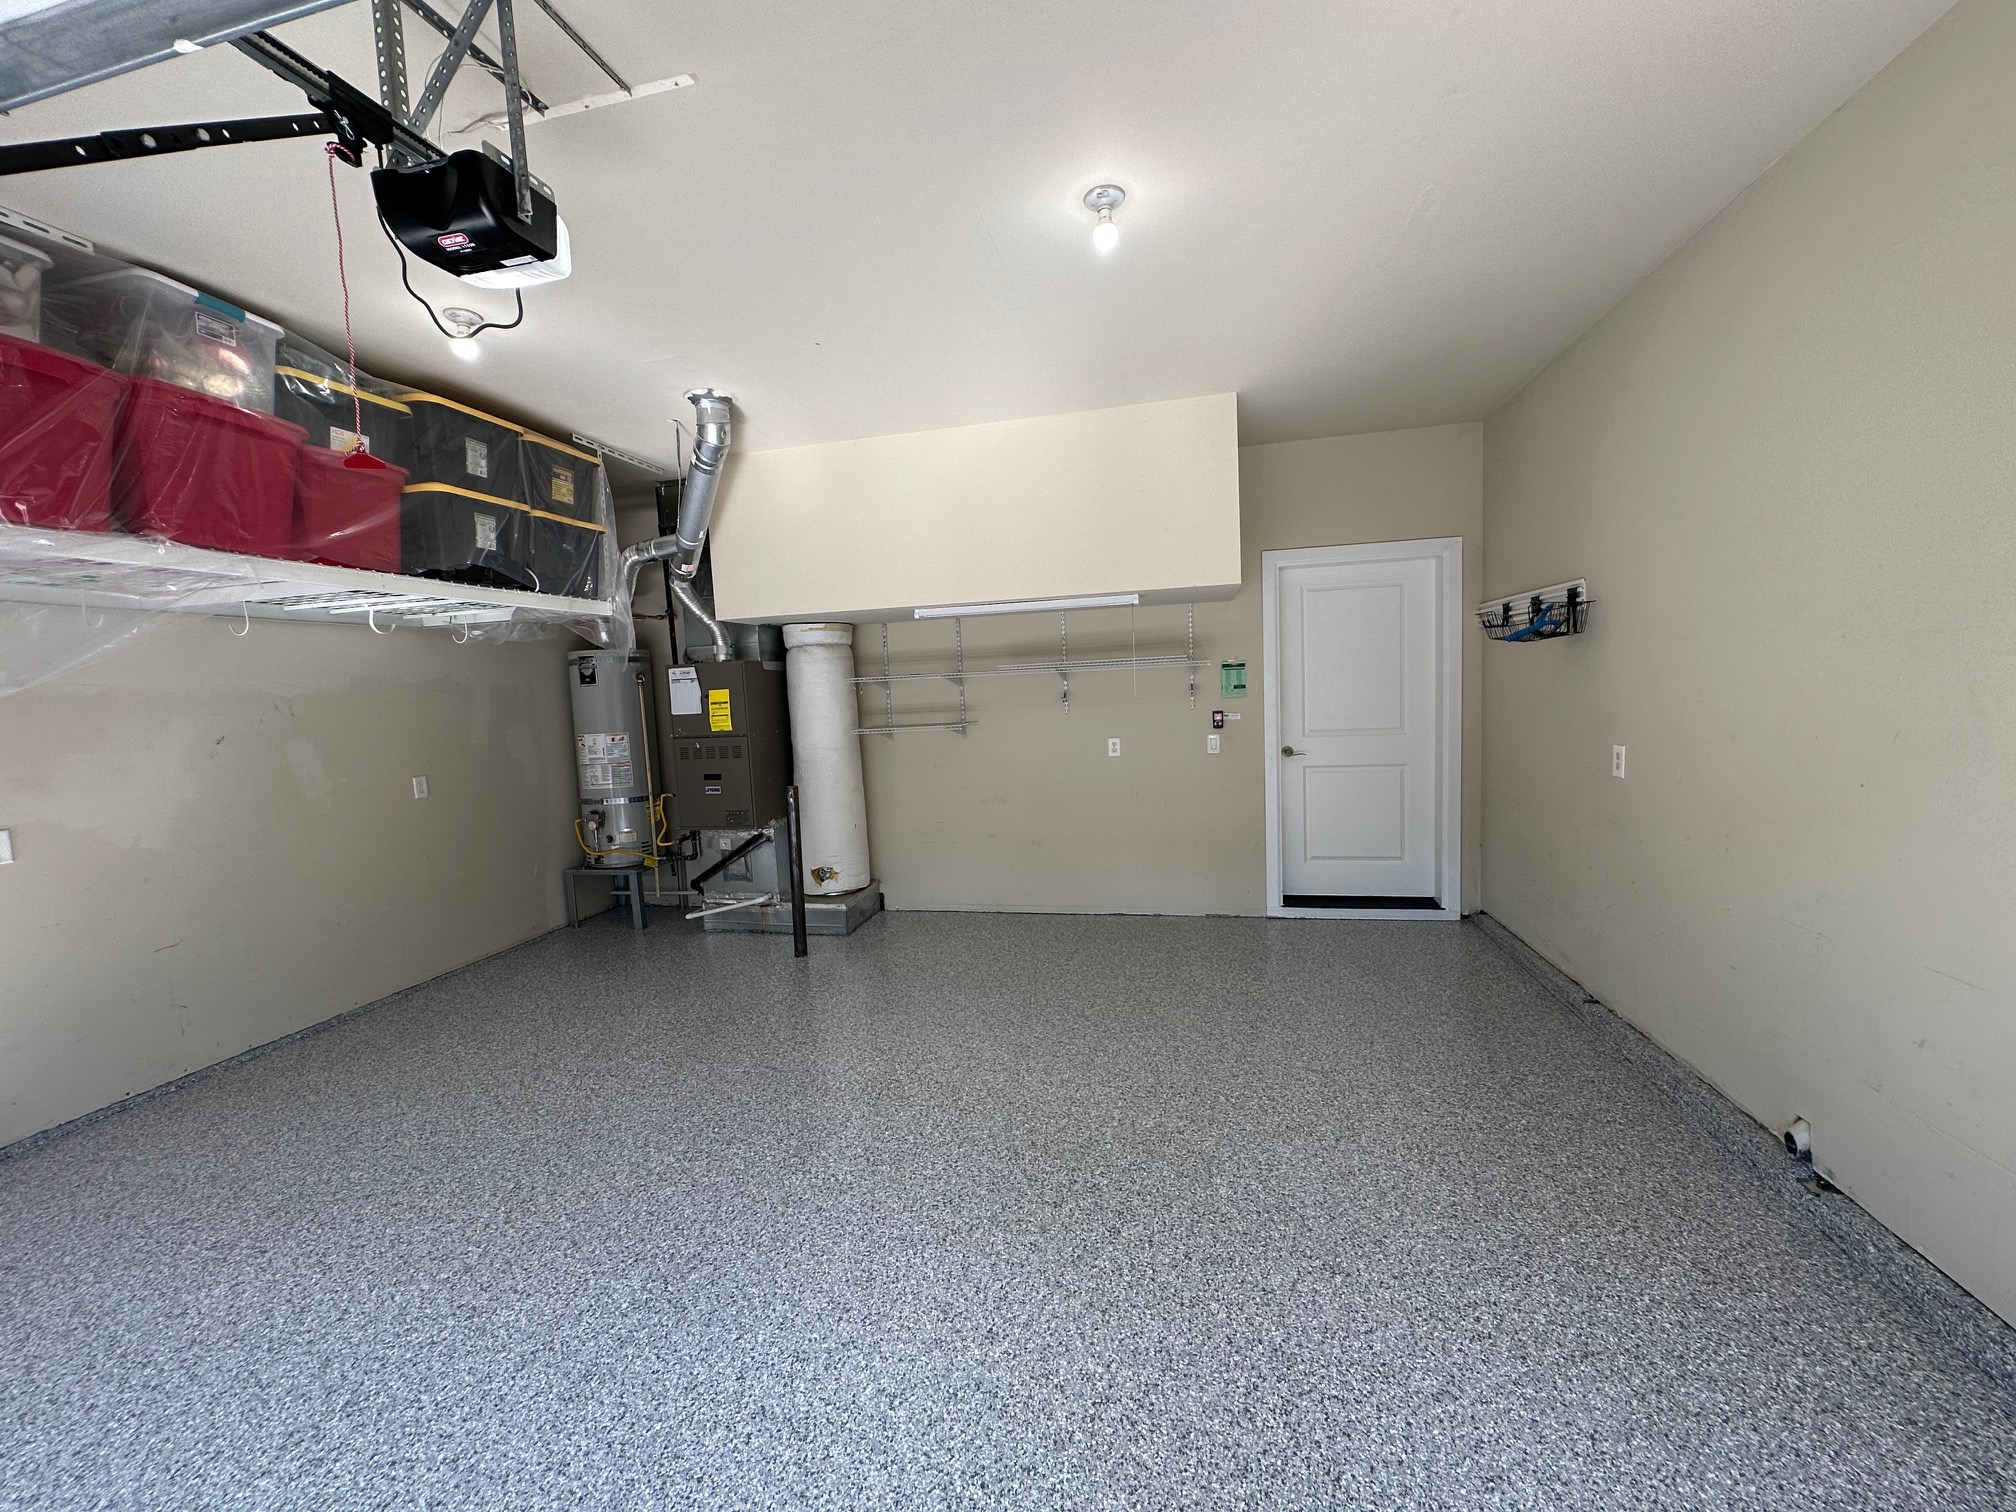 Garage Floor Coating in Clackamas, OR